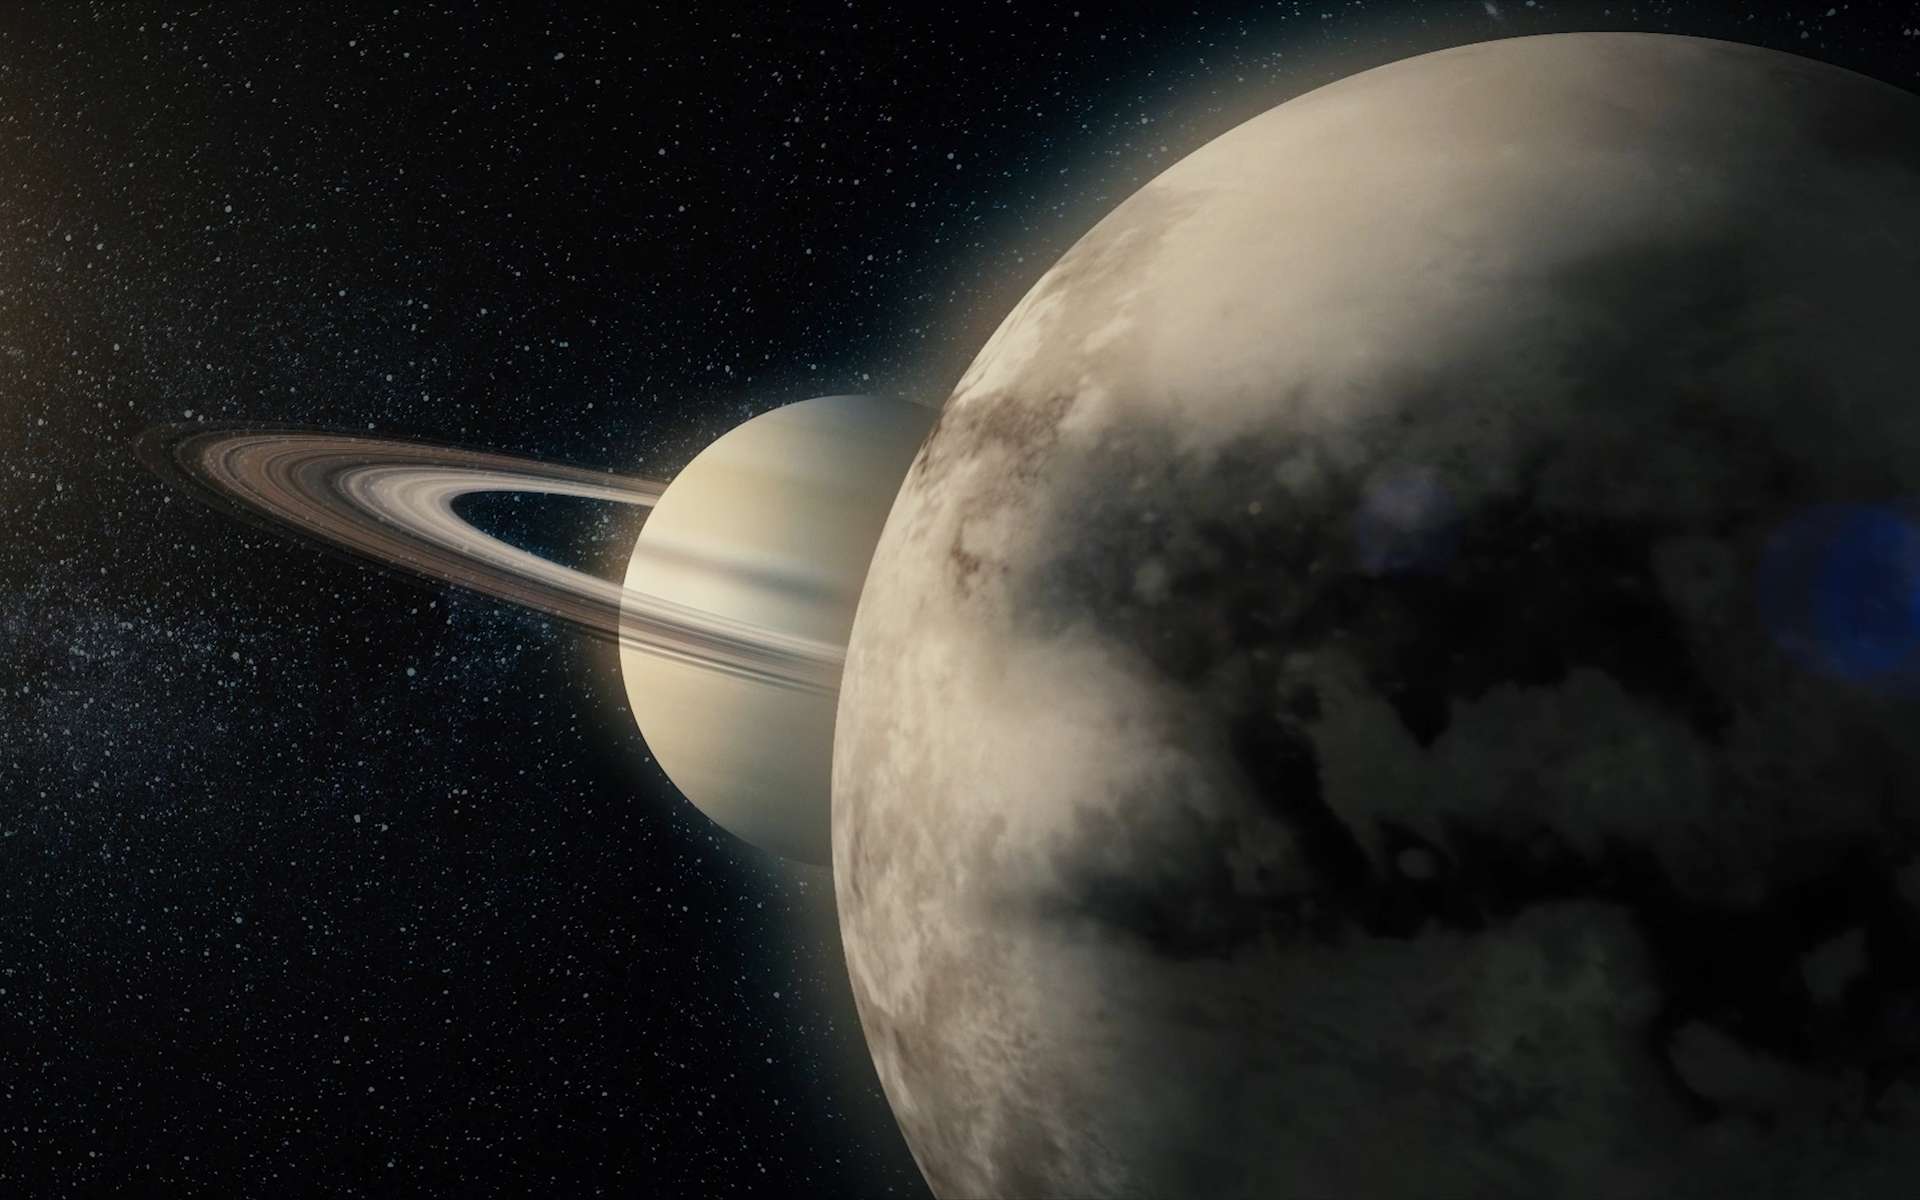 Représentation de Saturne et de sa lune Titan. © Media Whalestock, Adobe Stock